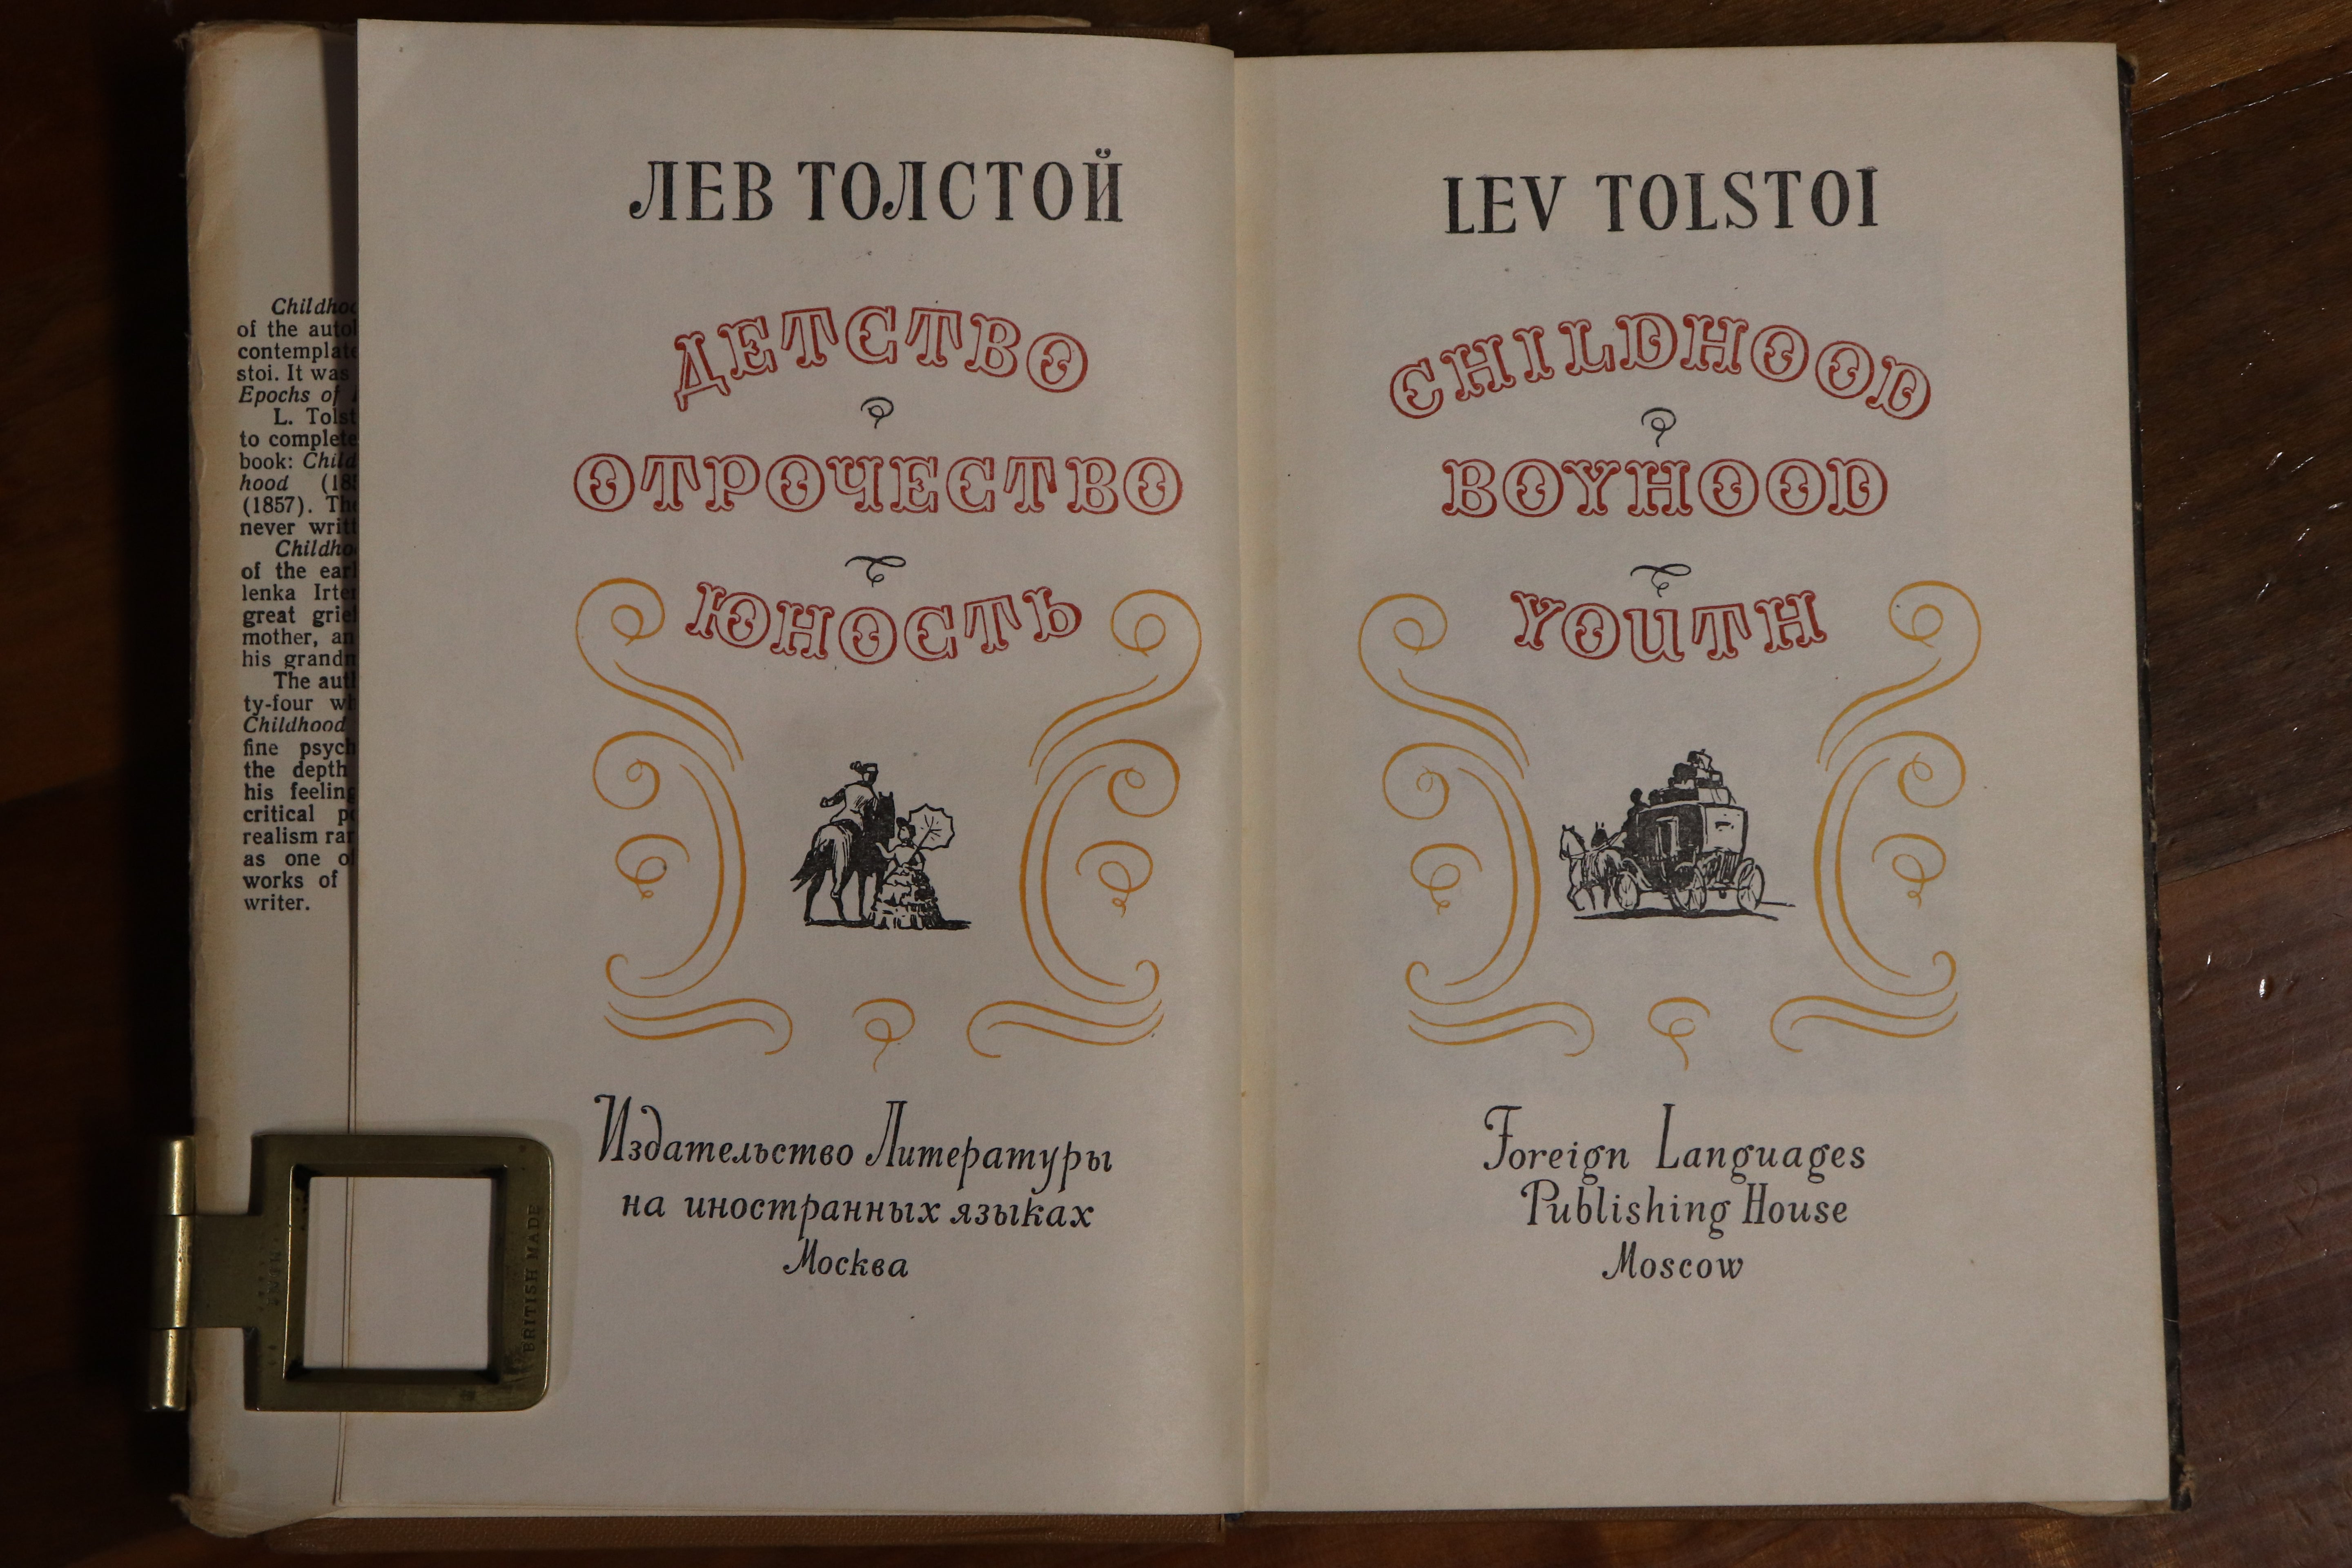 Lev Tolstoi: Childhood Boyhood Youth - c1935 - Antique Russian Literature Book